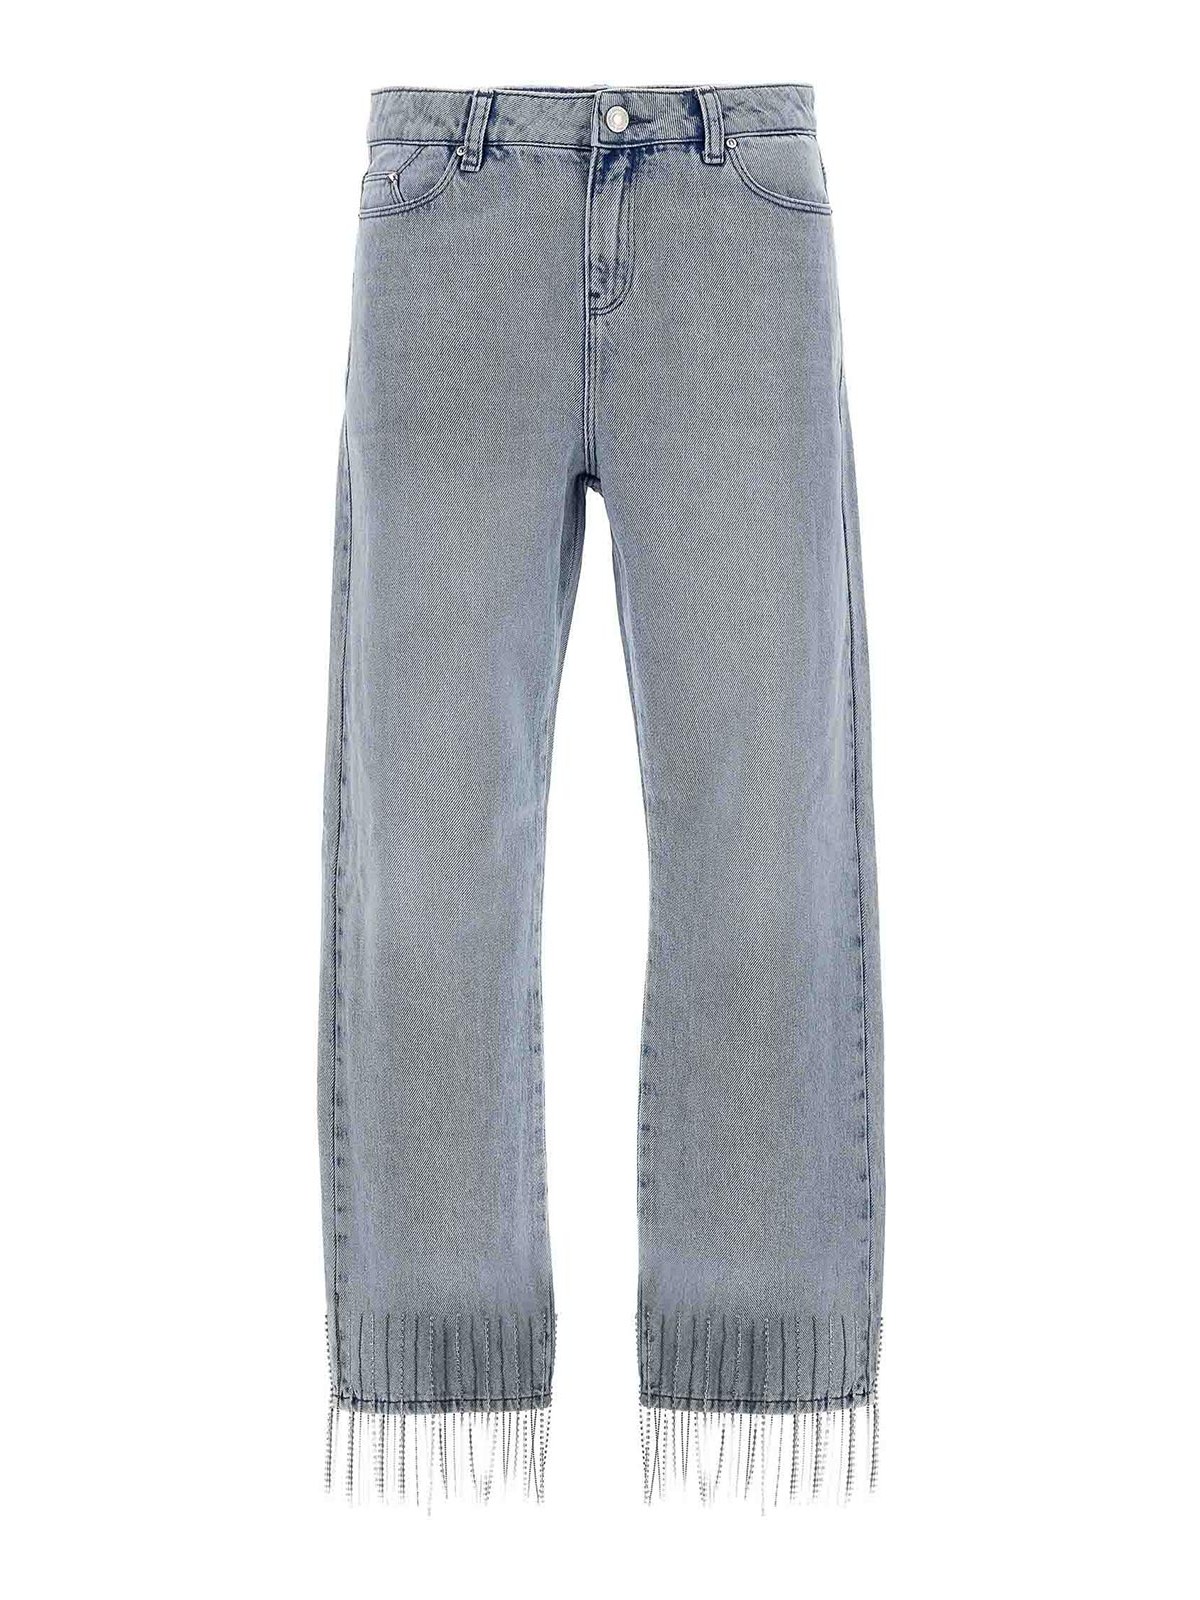 Karl Lagerfeld Rhinestone Fringed Jeans In Light Blue